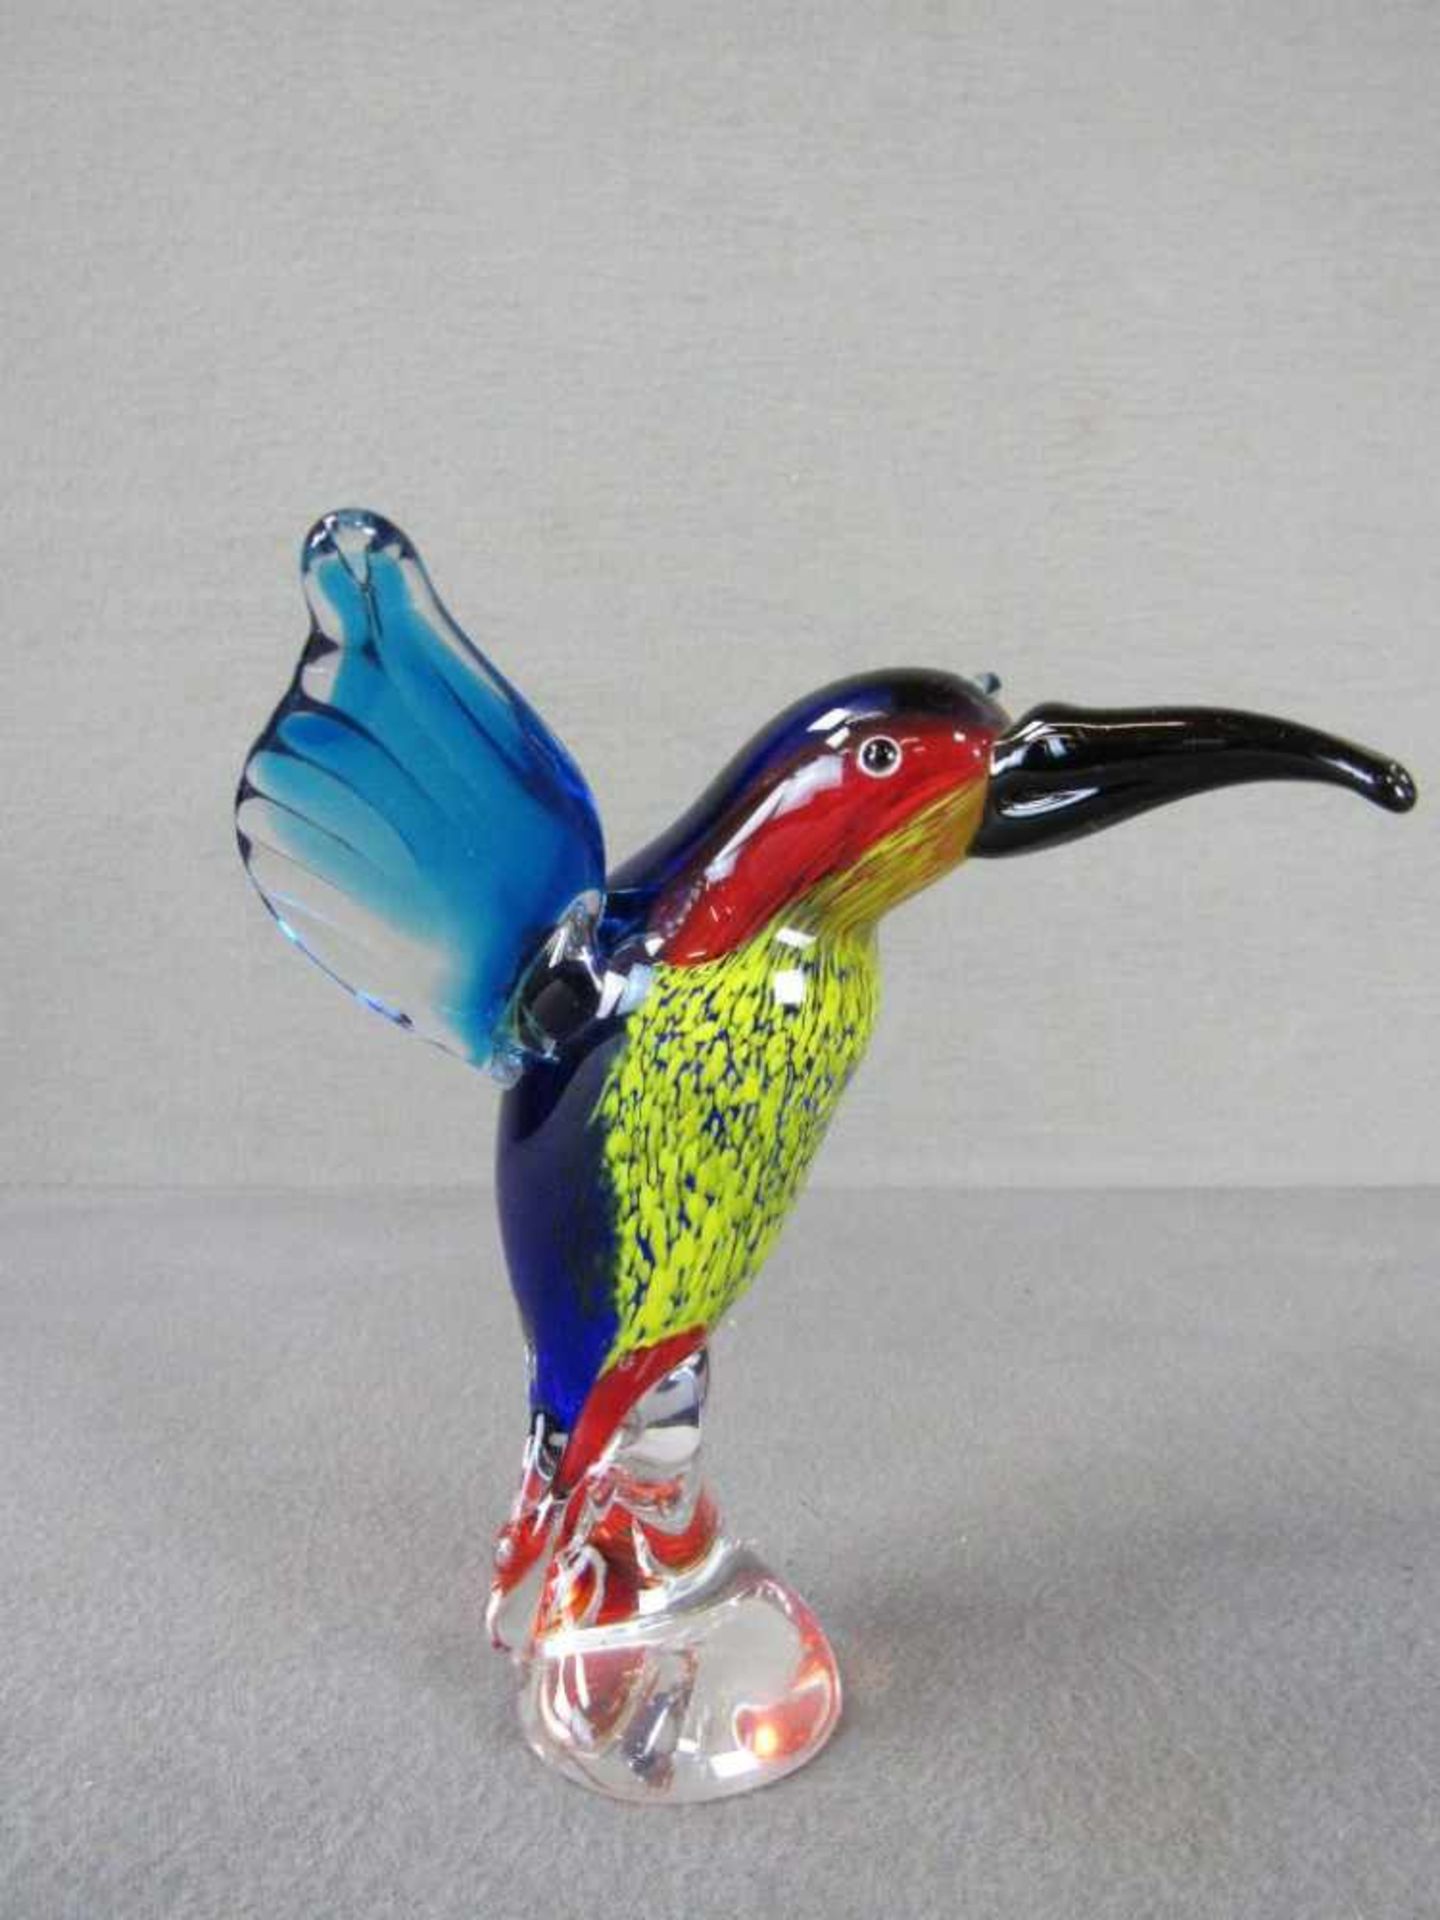 Glasskulptur Kiwi farbenfroh evtl Murano 18cm hoch - Image 4 of 5